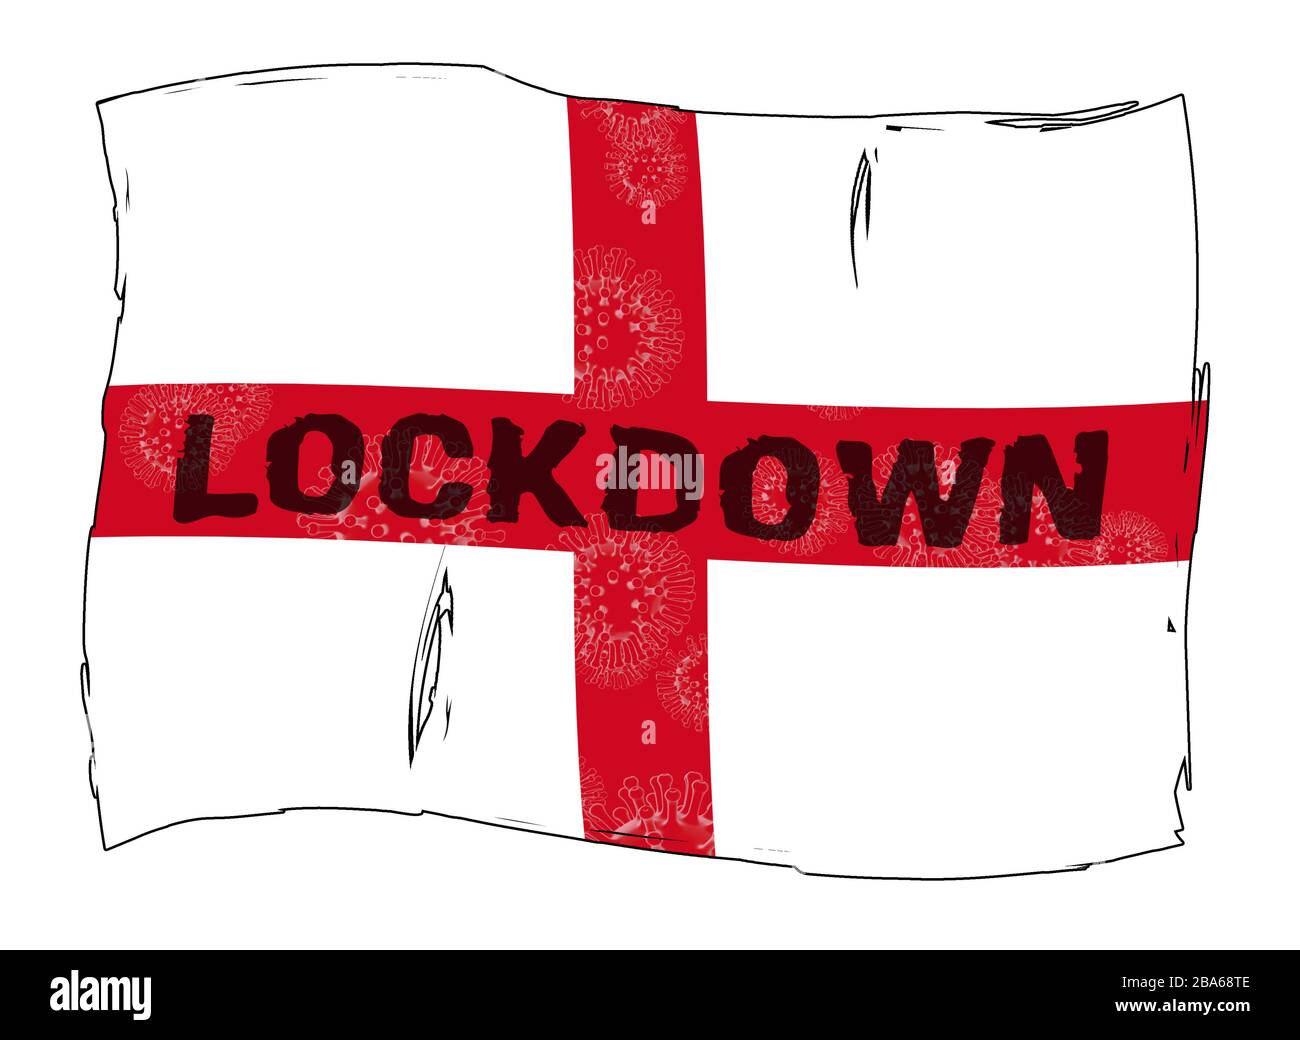 England lockdown confinement preventing coronavirus spread or outbreak. Covid 19 English precaution to lock down virus infection - 3d Illustration Stock Photo